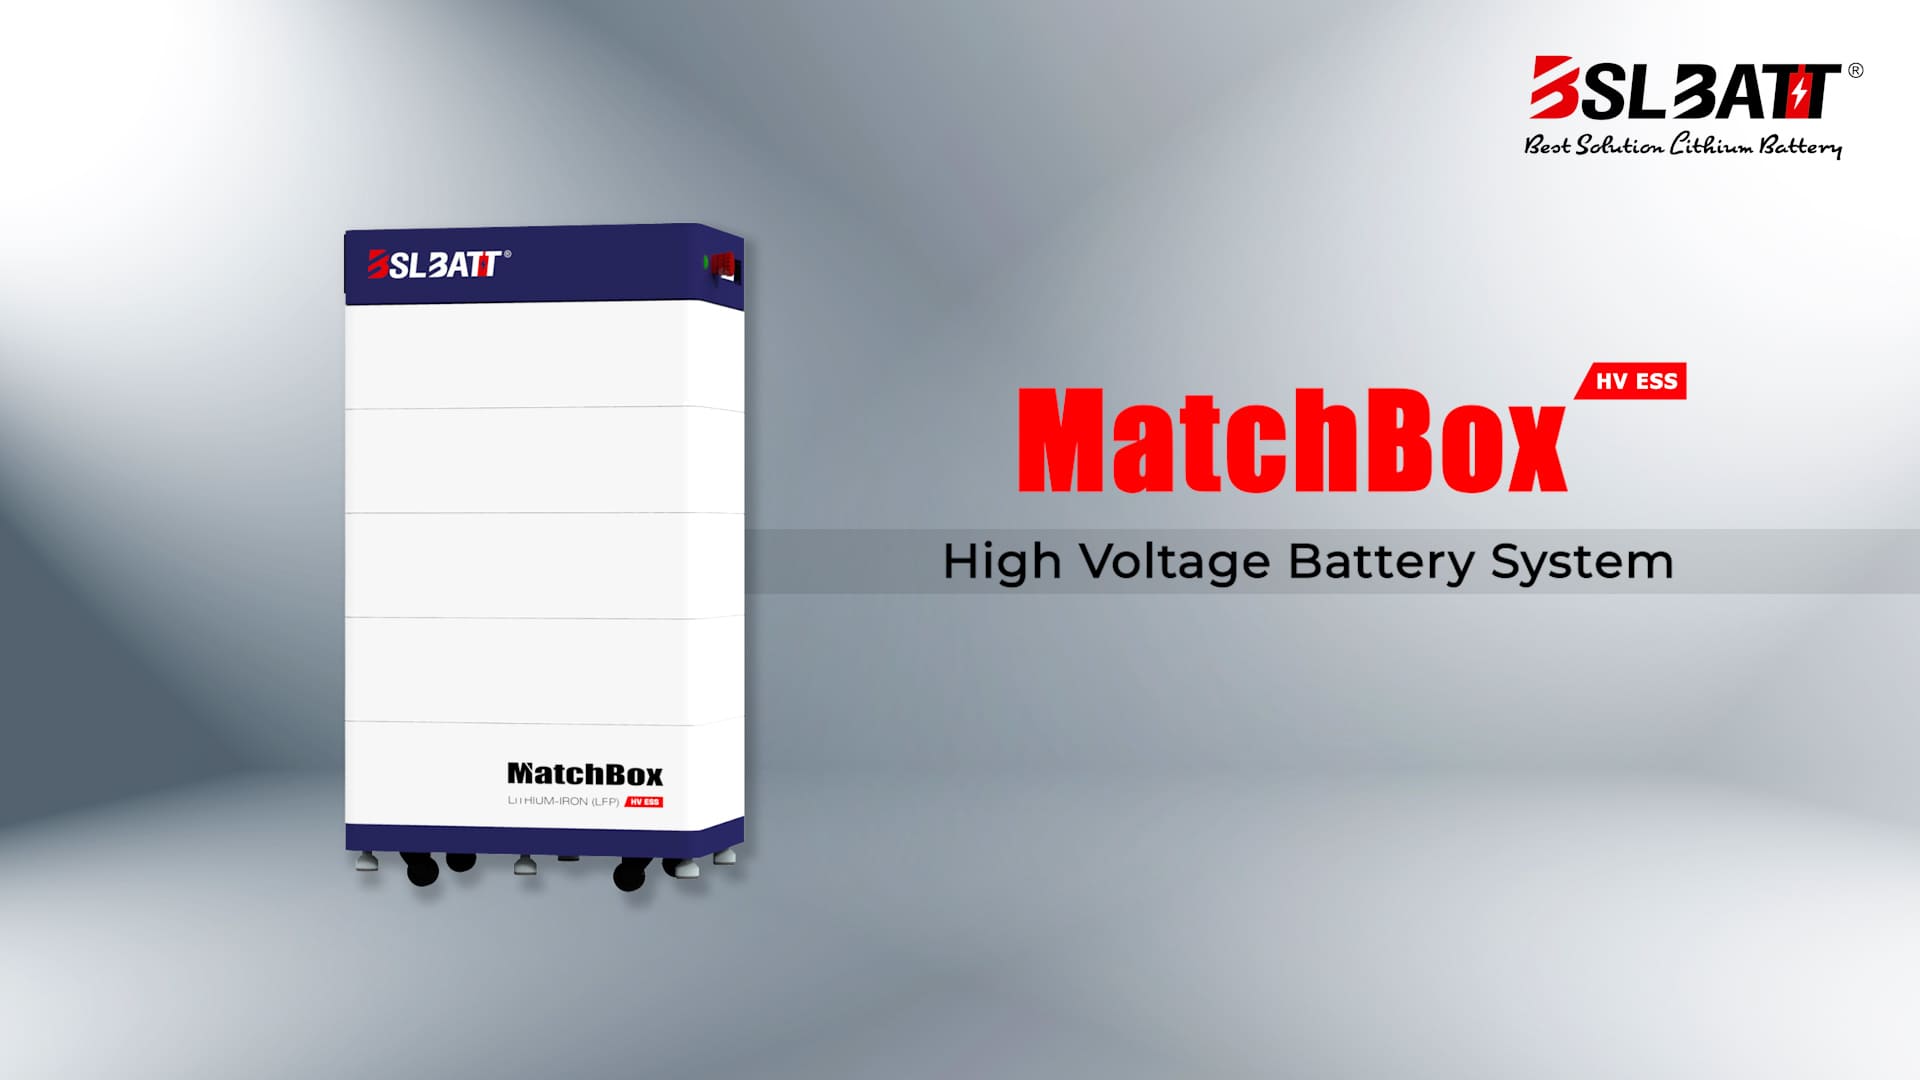 BSLBATT MatchBox HVS High Voltage Battery System